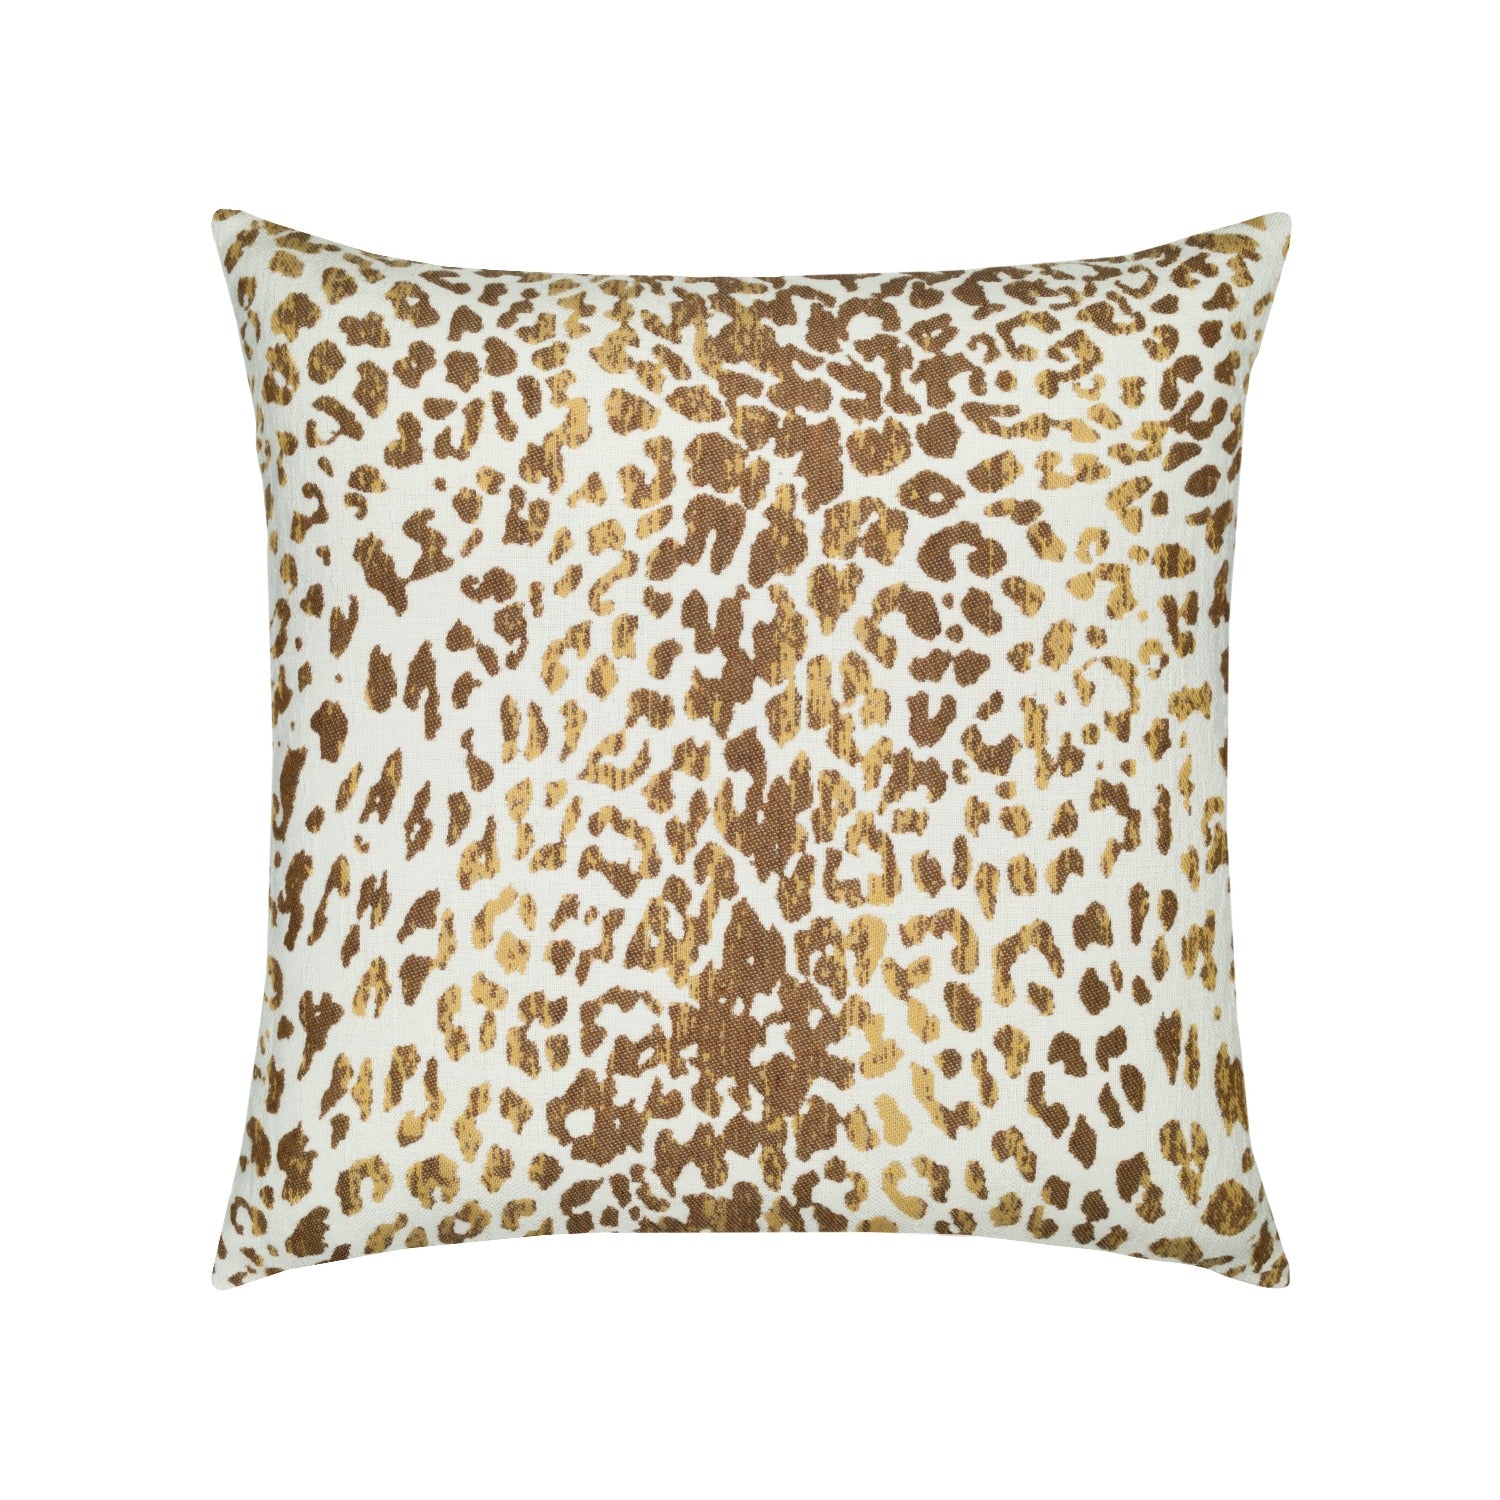 Elaine Smith 20 inch Square Outdoor Pillow - Wild One Caramel - Polyester Fiber Fill Throw Pillows 12030990